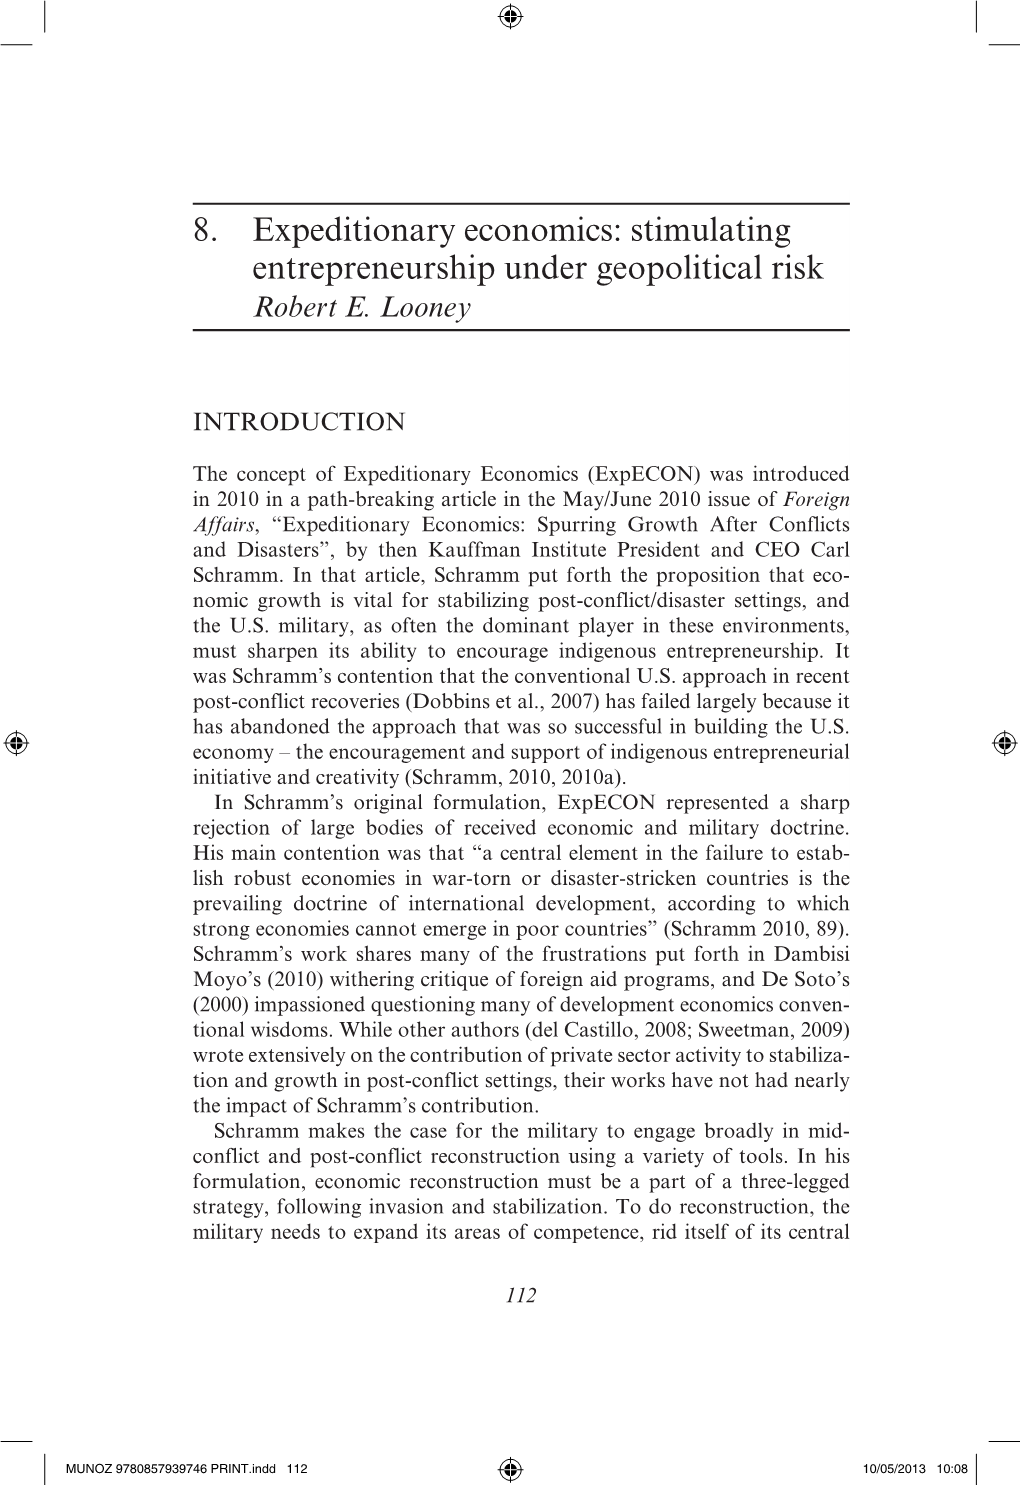 8. Expeditionary Economics: Stimulating Entrepreneurship Under Geopolitical Risk Robert E